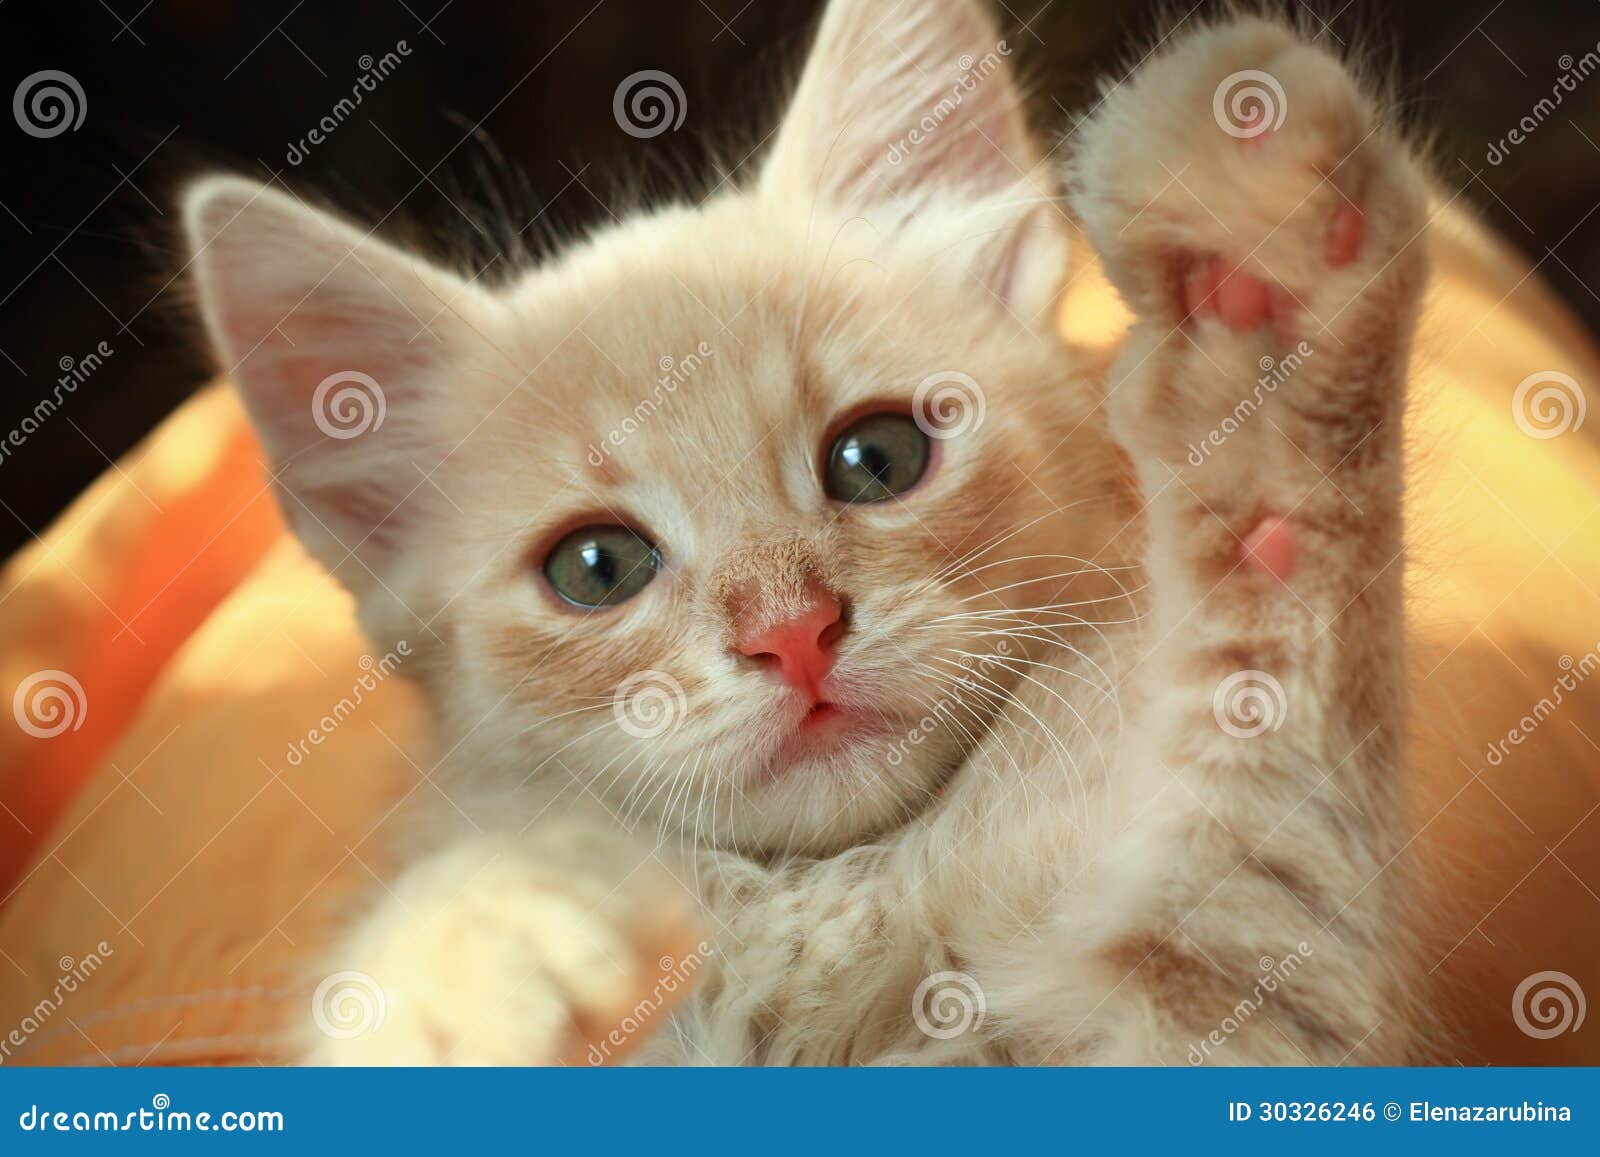 165 Cute Kitten High Five Stock Photos - Free & Royalty-Free Stock ...